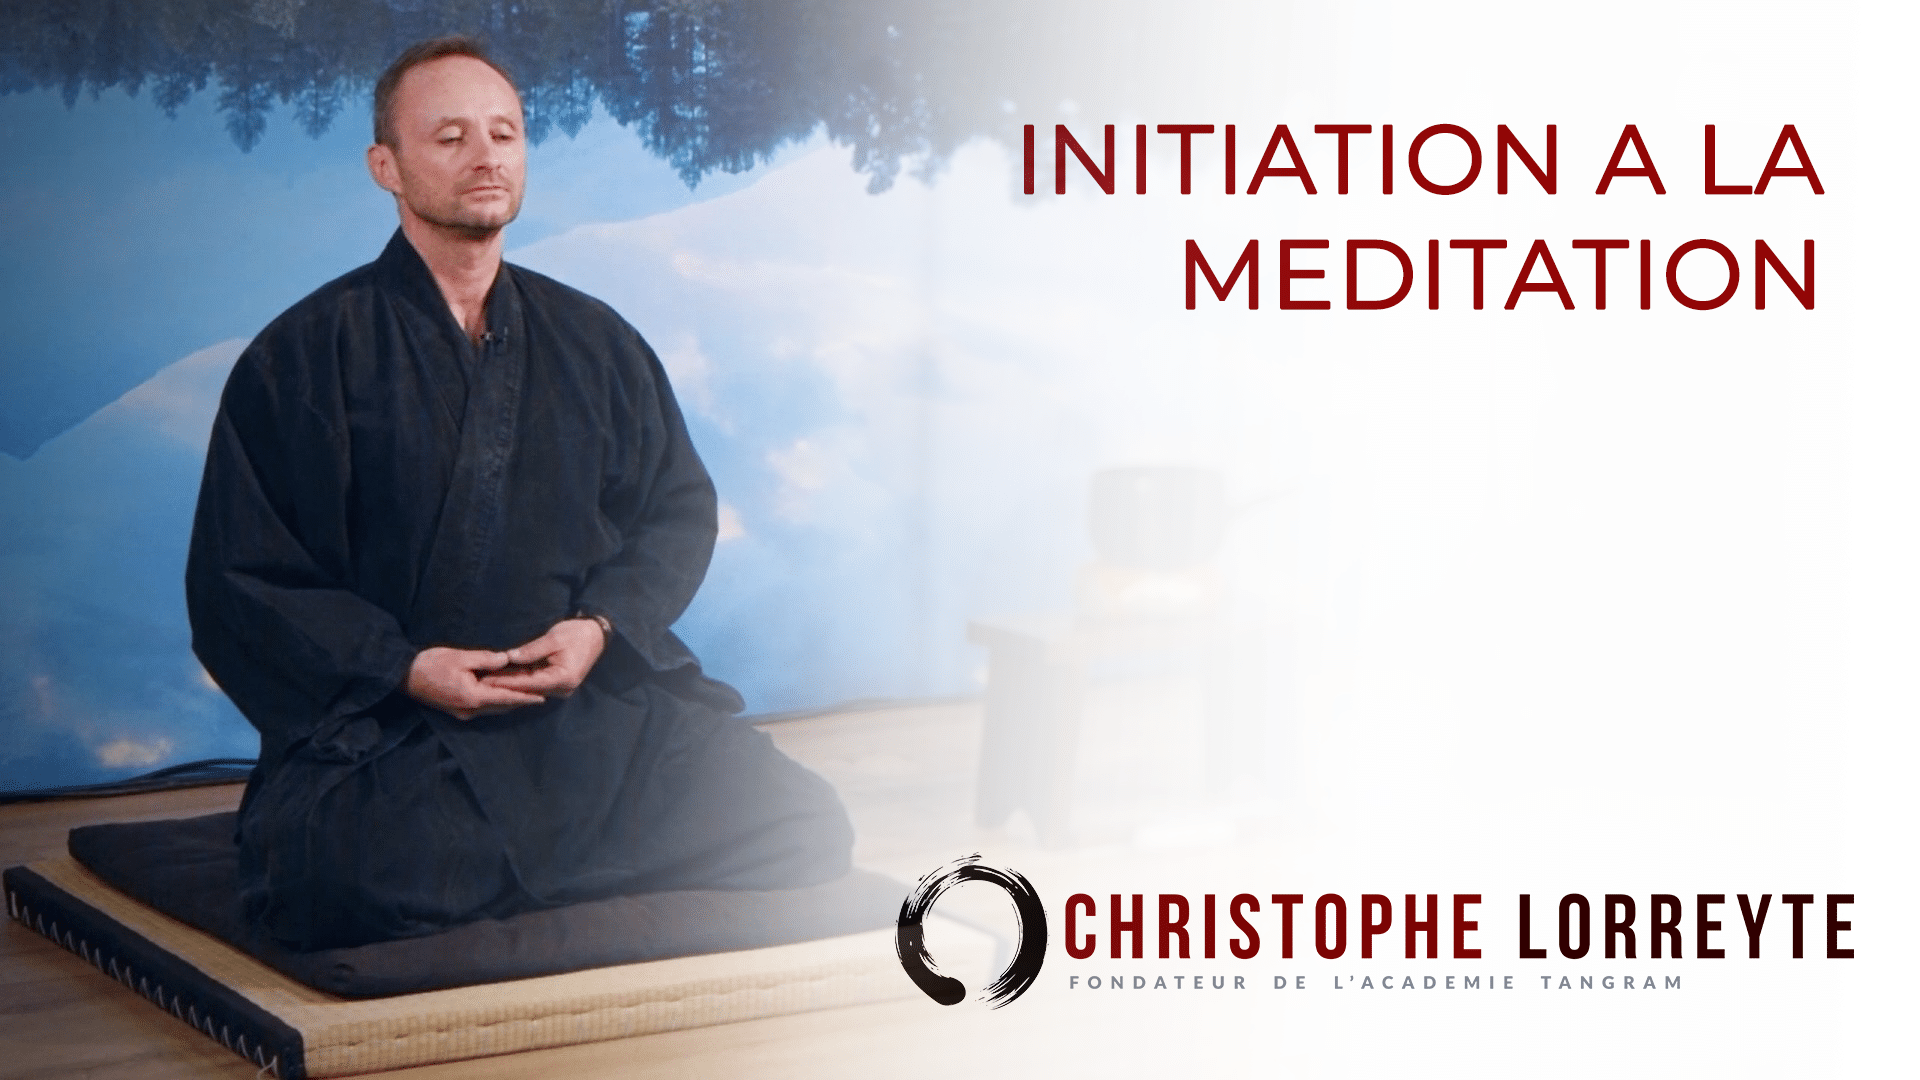 Initiation a la meditation baniere